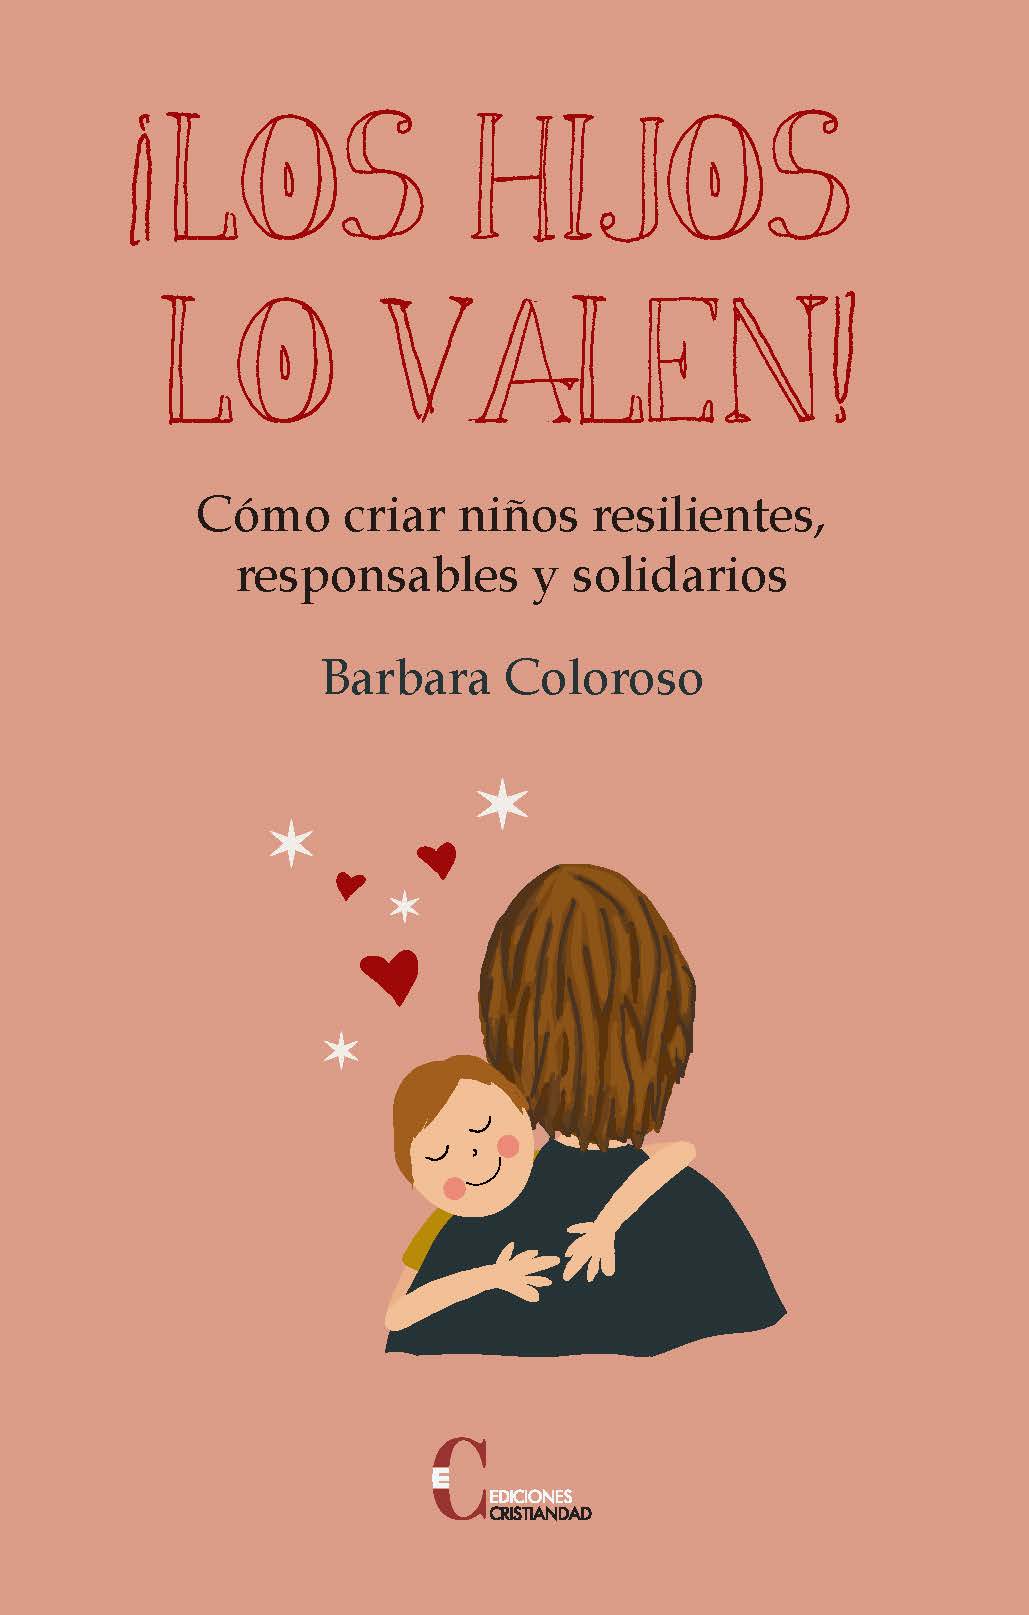 Barbara Coloroso publica en España 